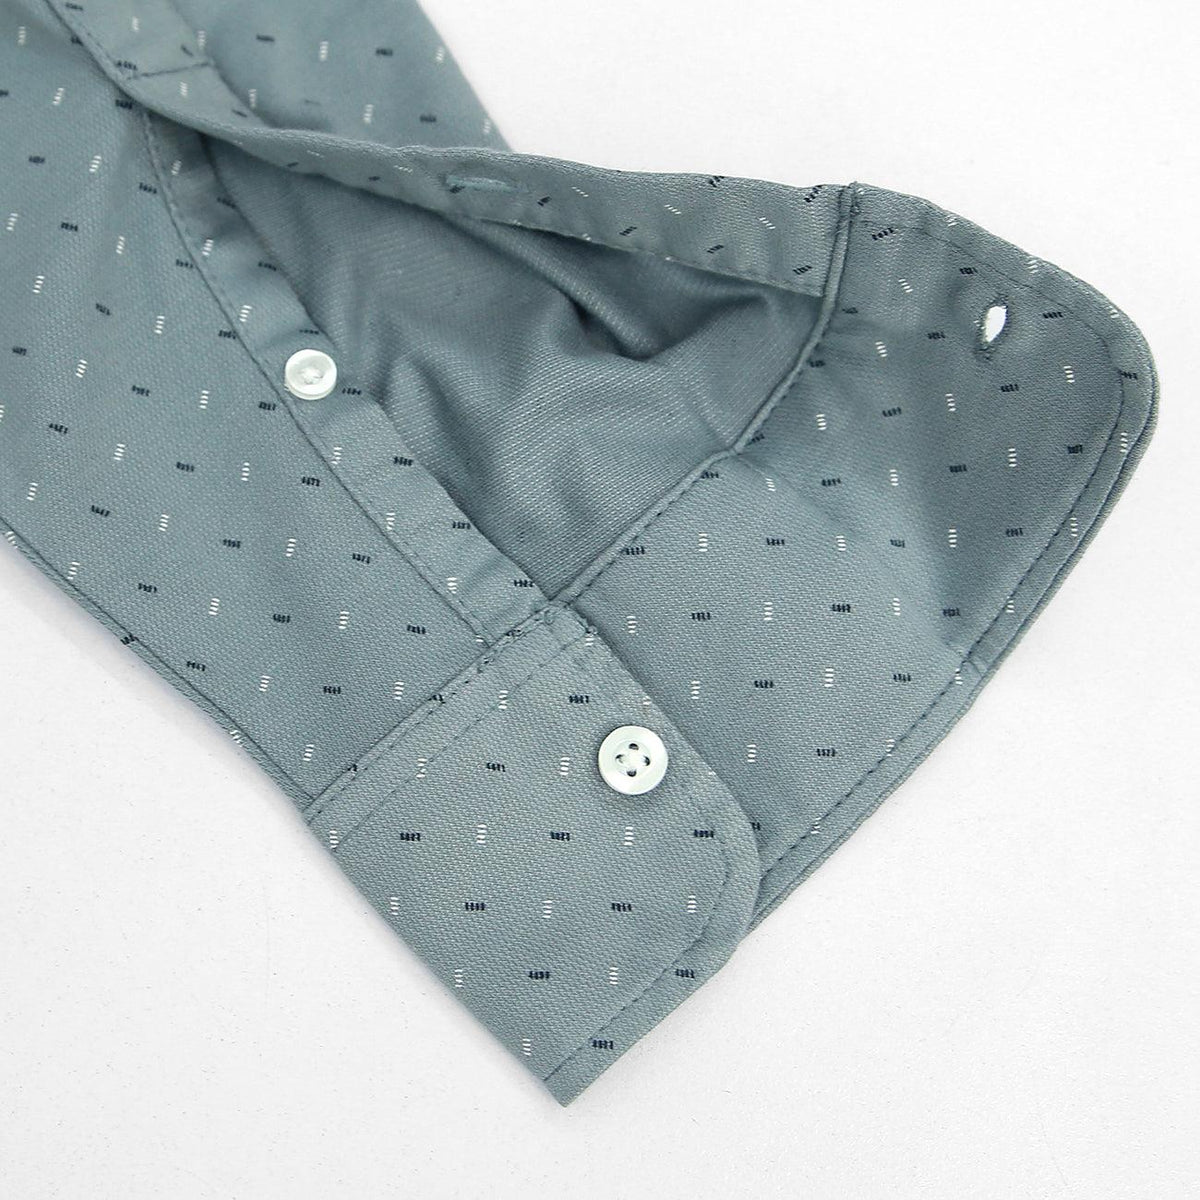 Men Premium Quality Super Soft Long Sleeve Slim Fit Stretch Casual Shirt (CR-11504) - Brands River